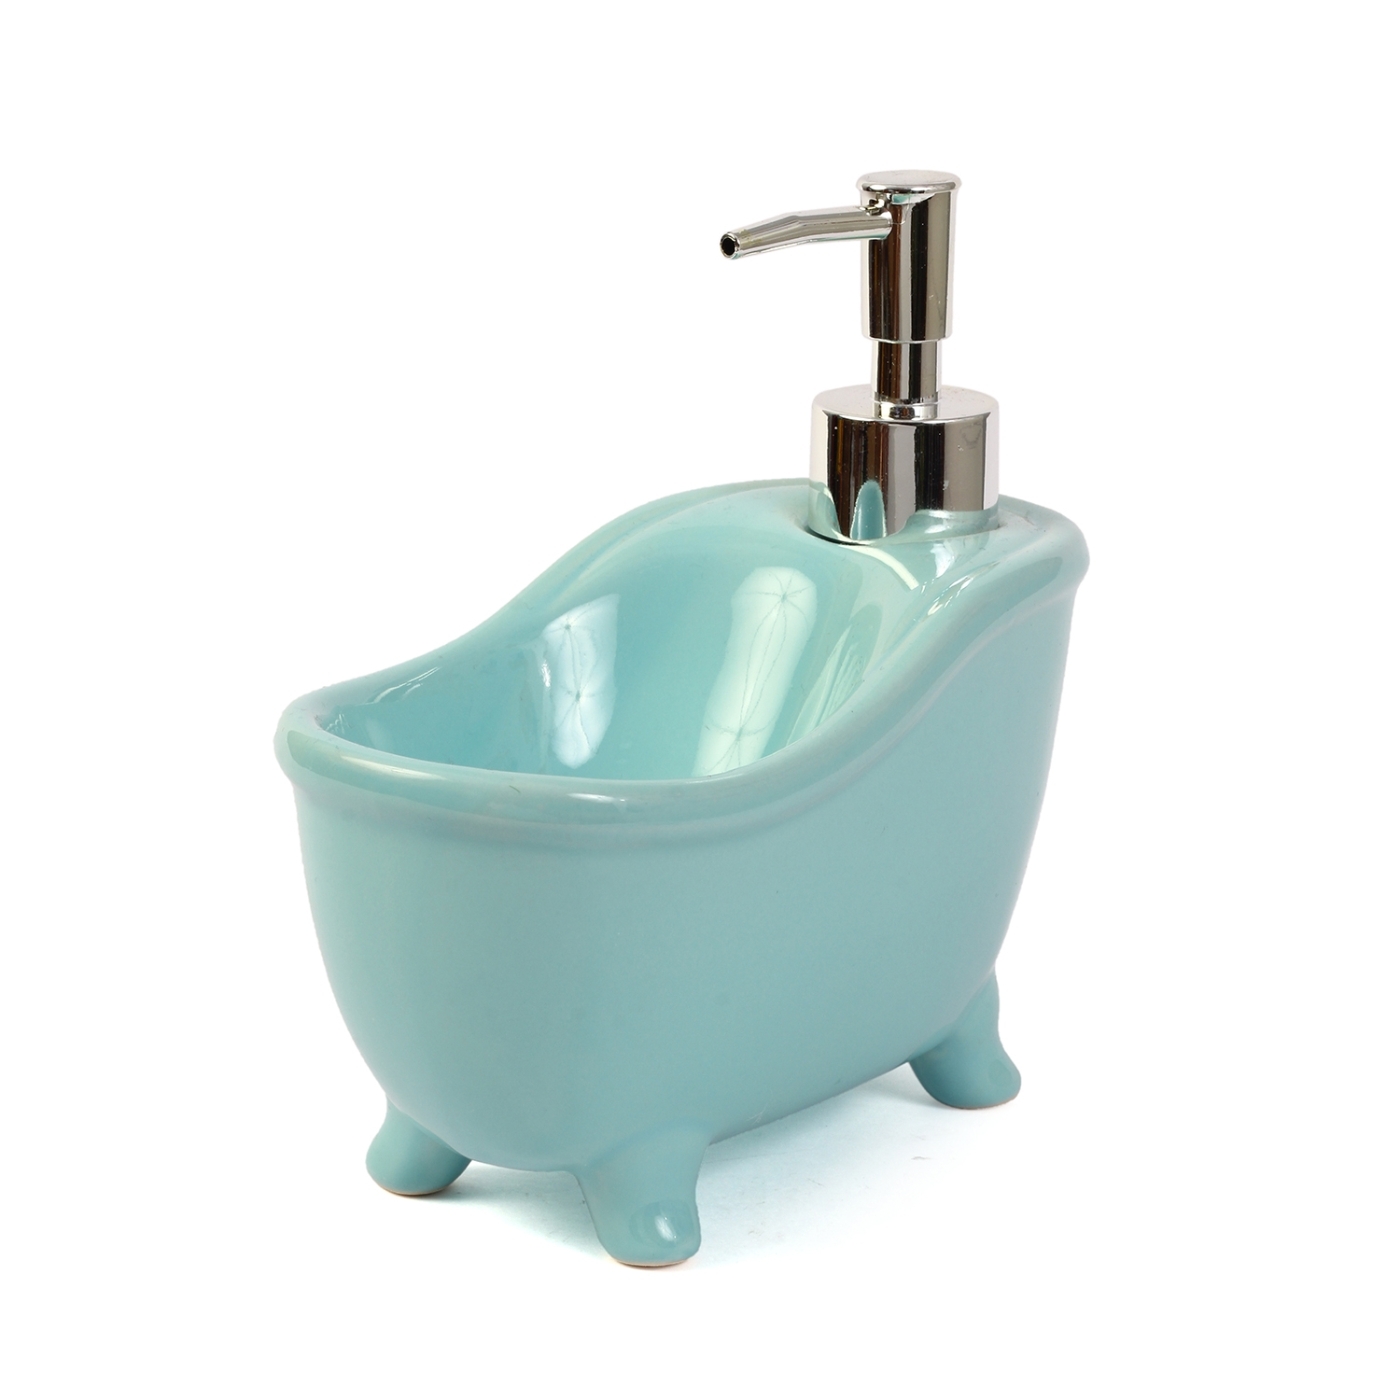 ORKA HOME Ceramic Liquid Soap Dispenser For Bathroom/Kitchen Use Big Size (Blue)  